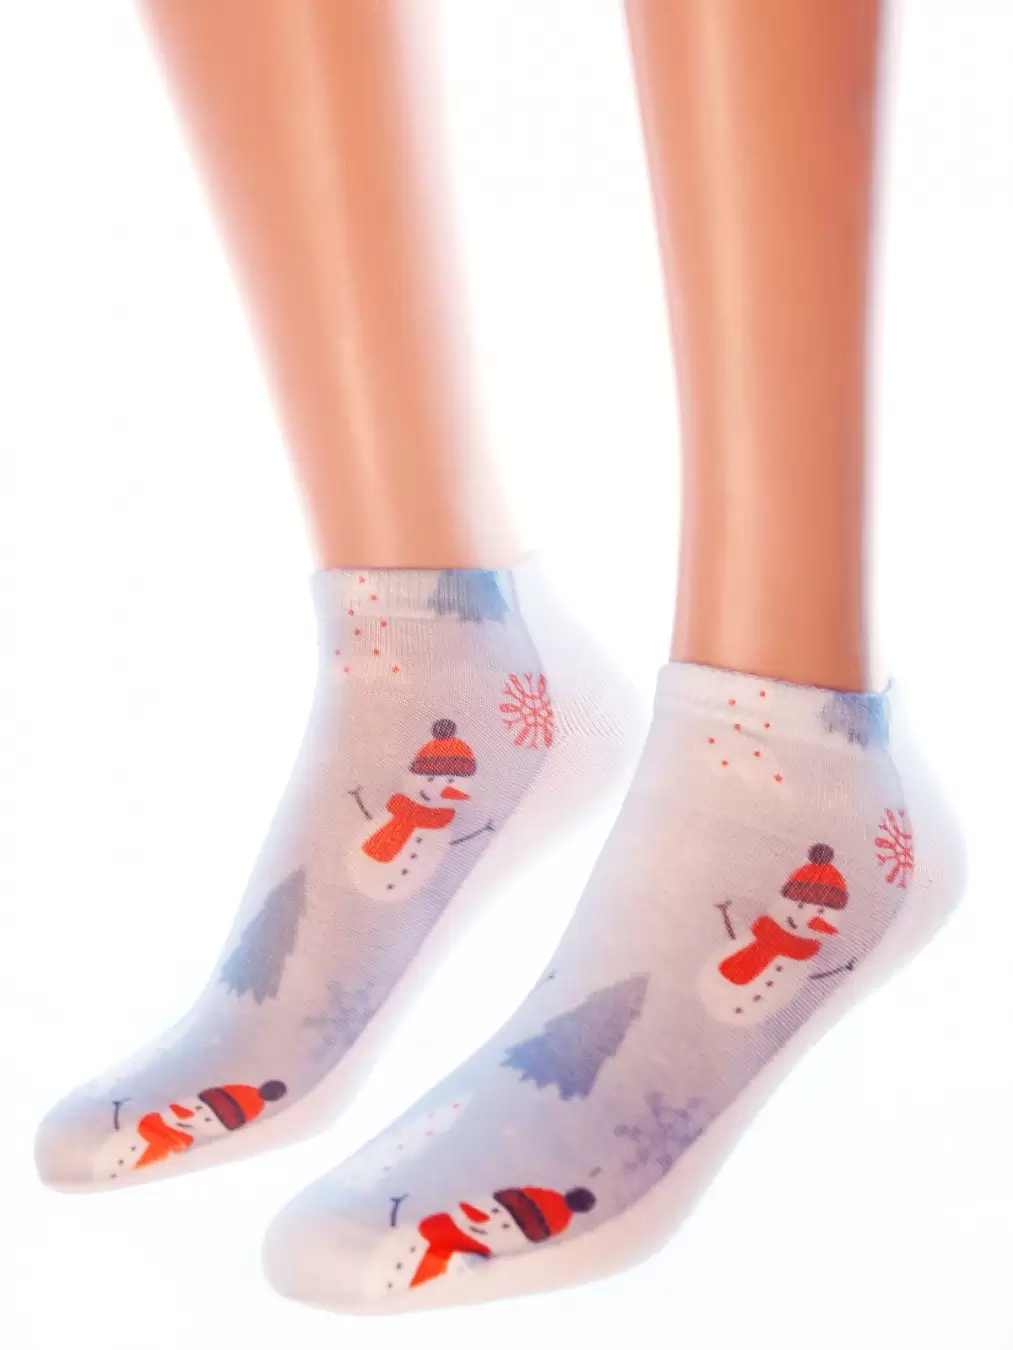 Hobby Line 3Д03-2, носки женские Снеговик (изображение 1)